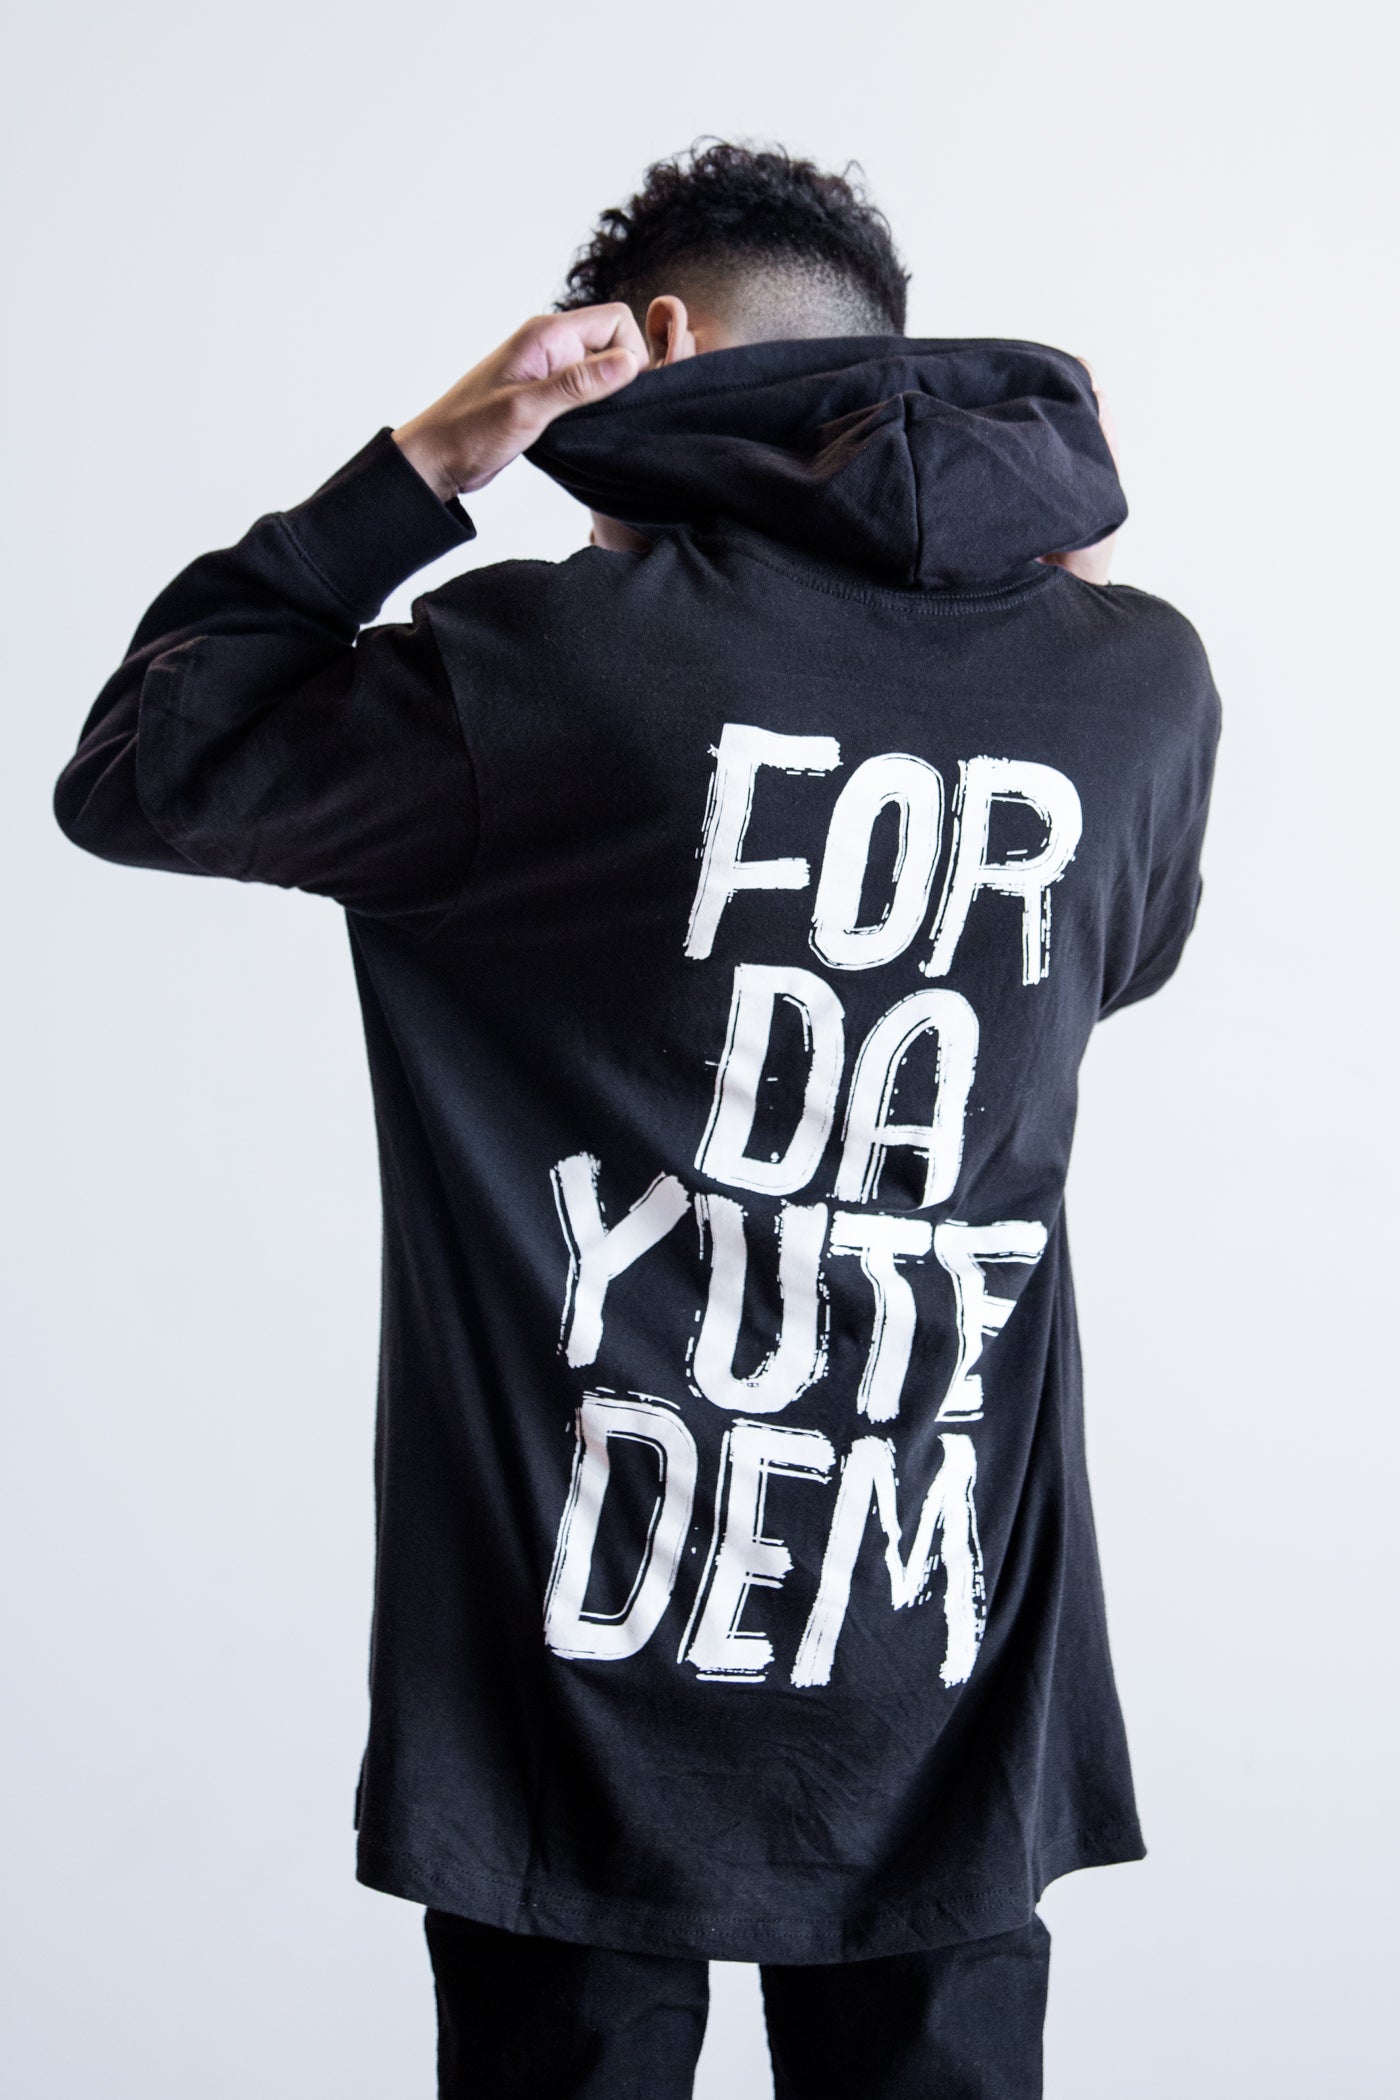 T-Shirt: For Da YUTE Dem (black)